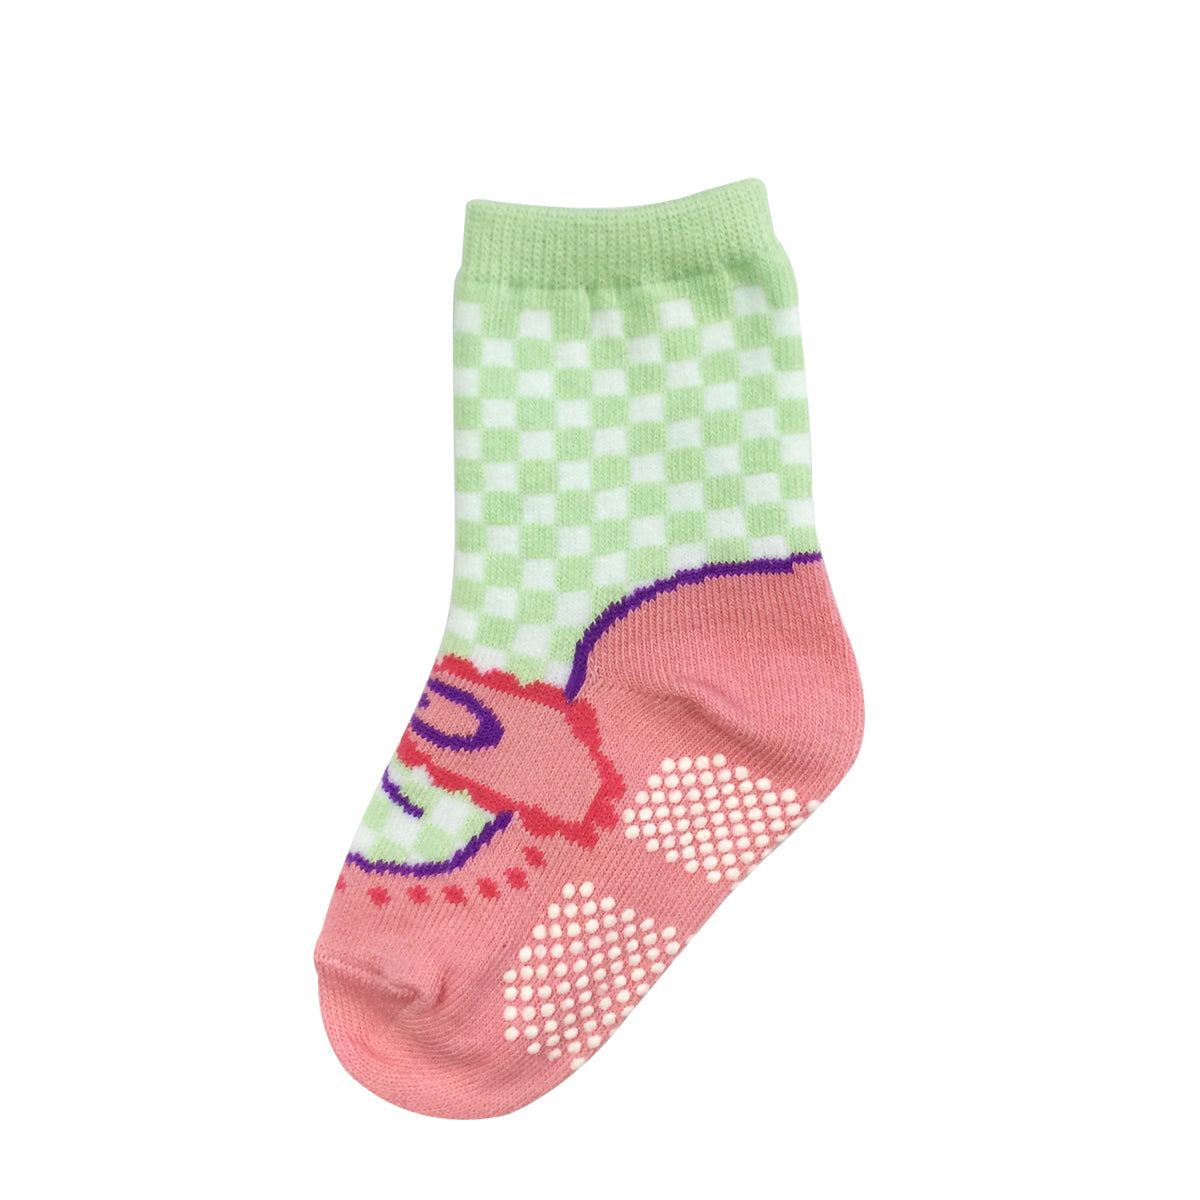 Wrapables Cutie Pie Mary Jane Non-Skid Socks (Set of 6), Set 1